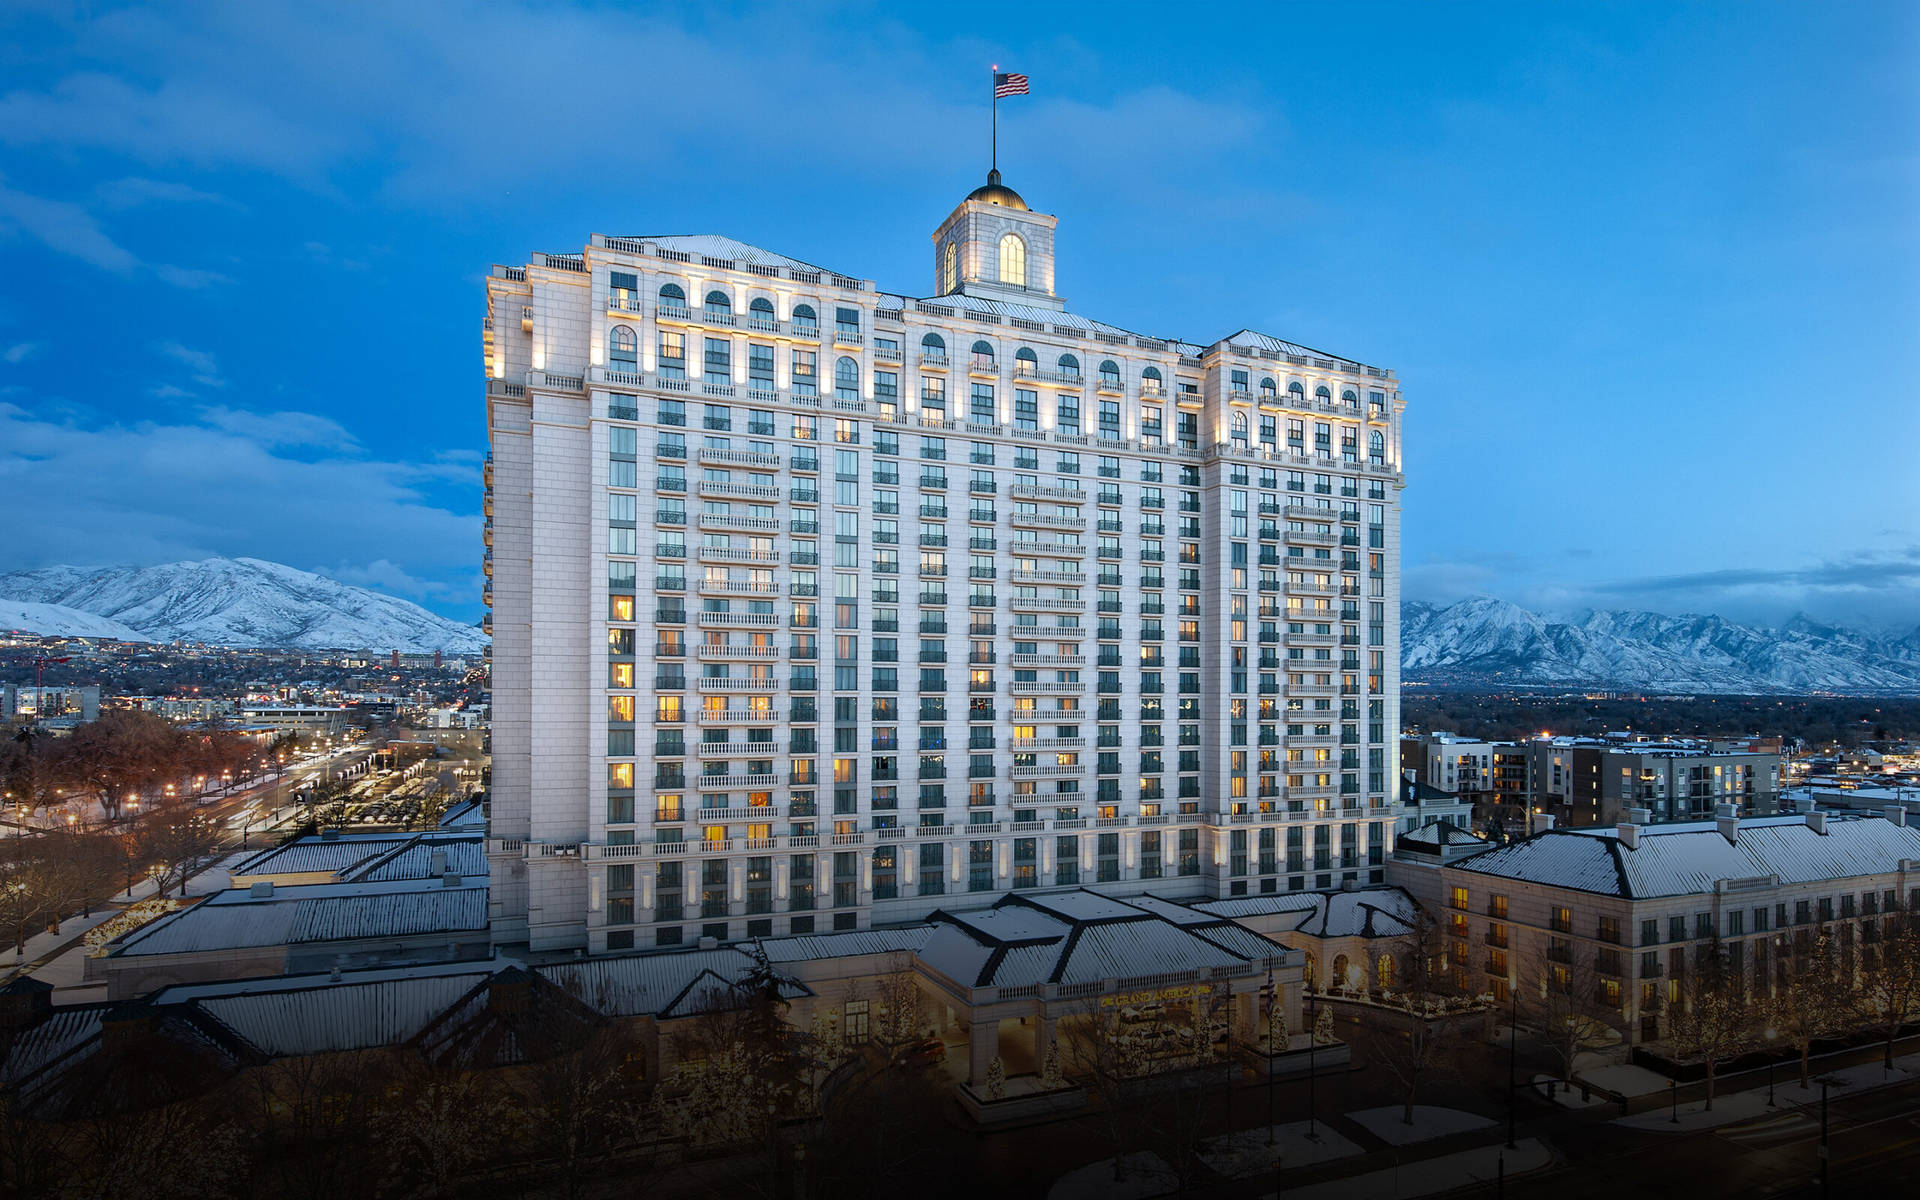 Salt Lake City Grand America Hotel Background